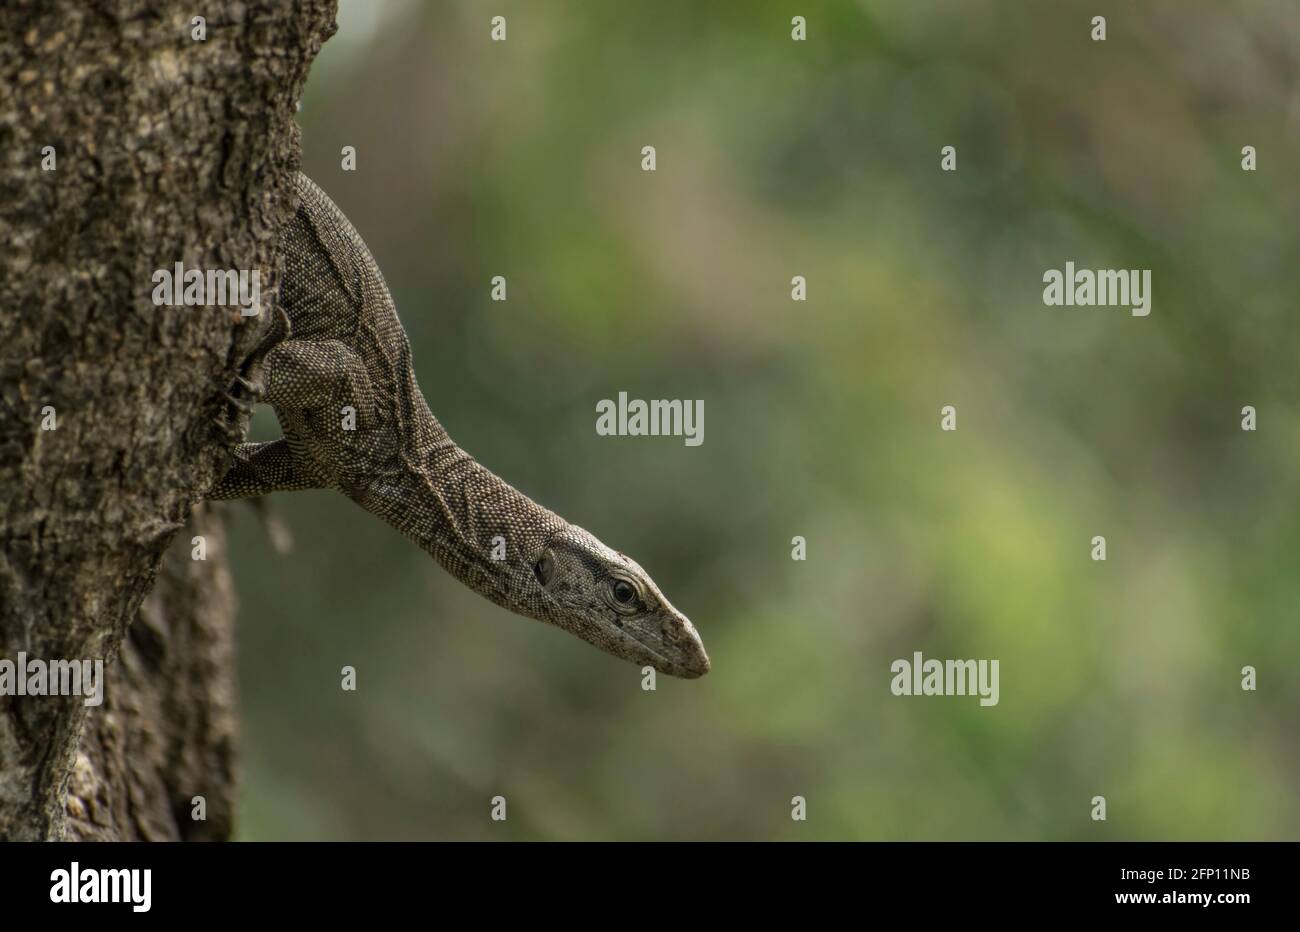 A Bengal monitor lizard (Varanus bengalensis) on a tree trunk. Stock Photo